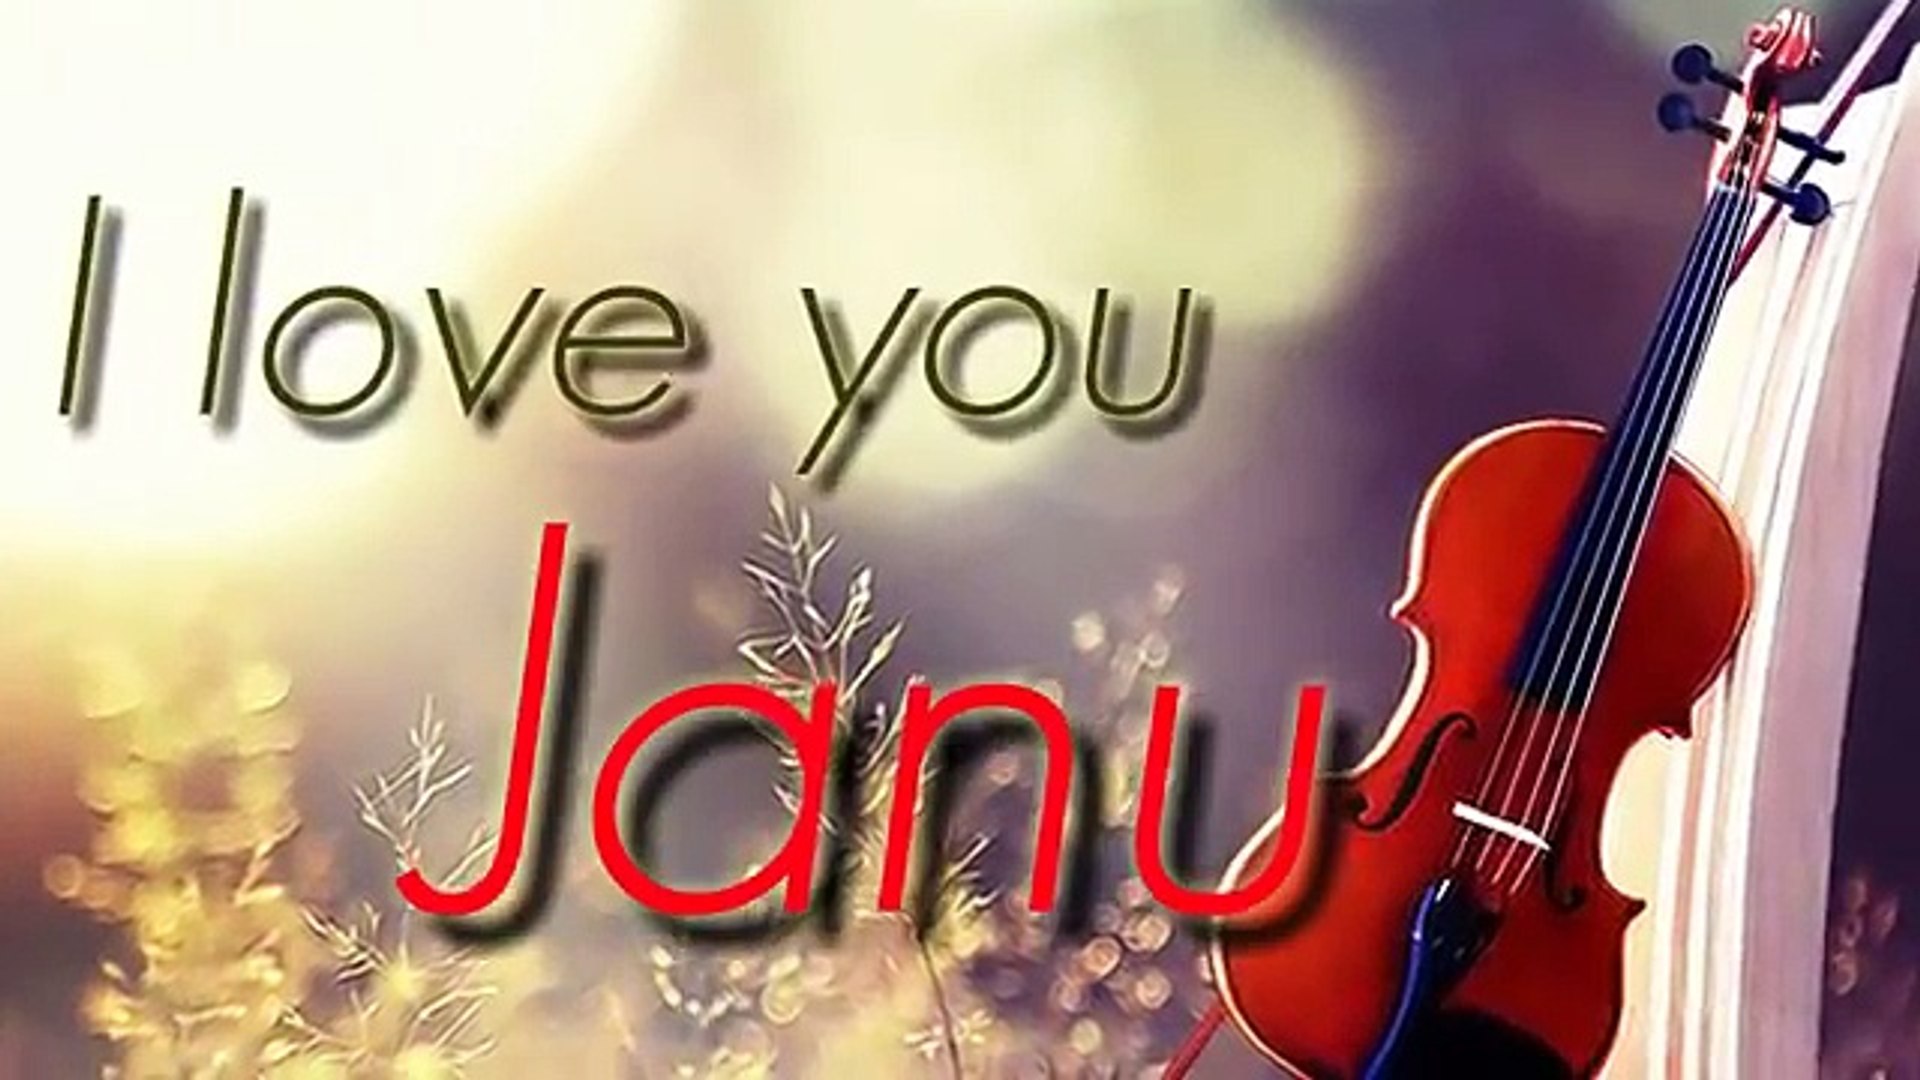 L Love You Janu - HD Wallpaper 